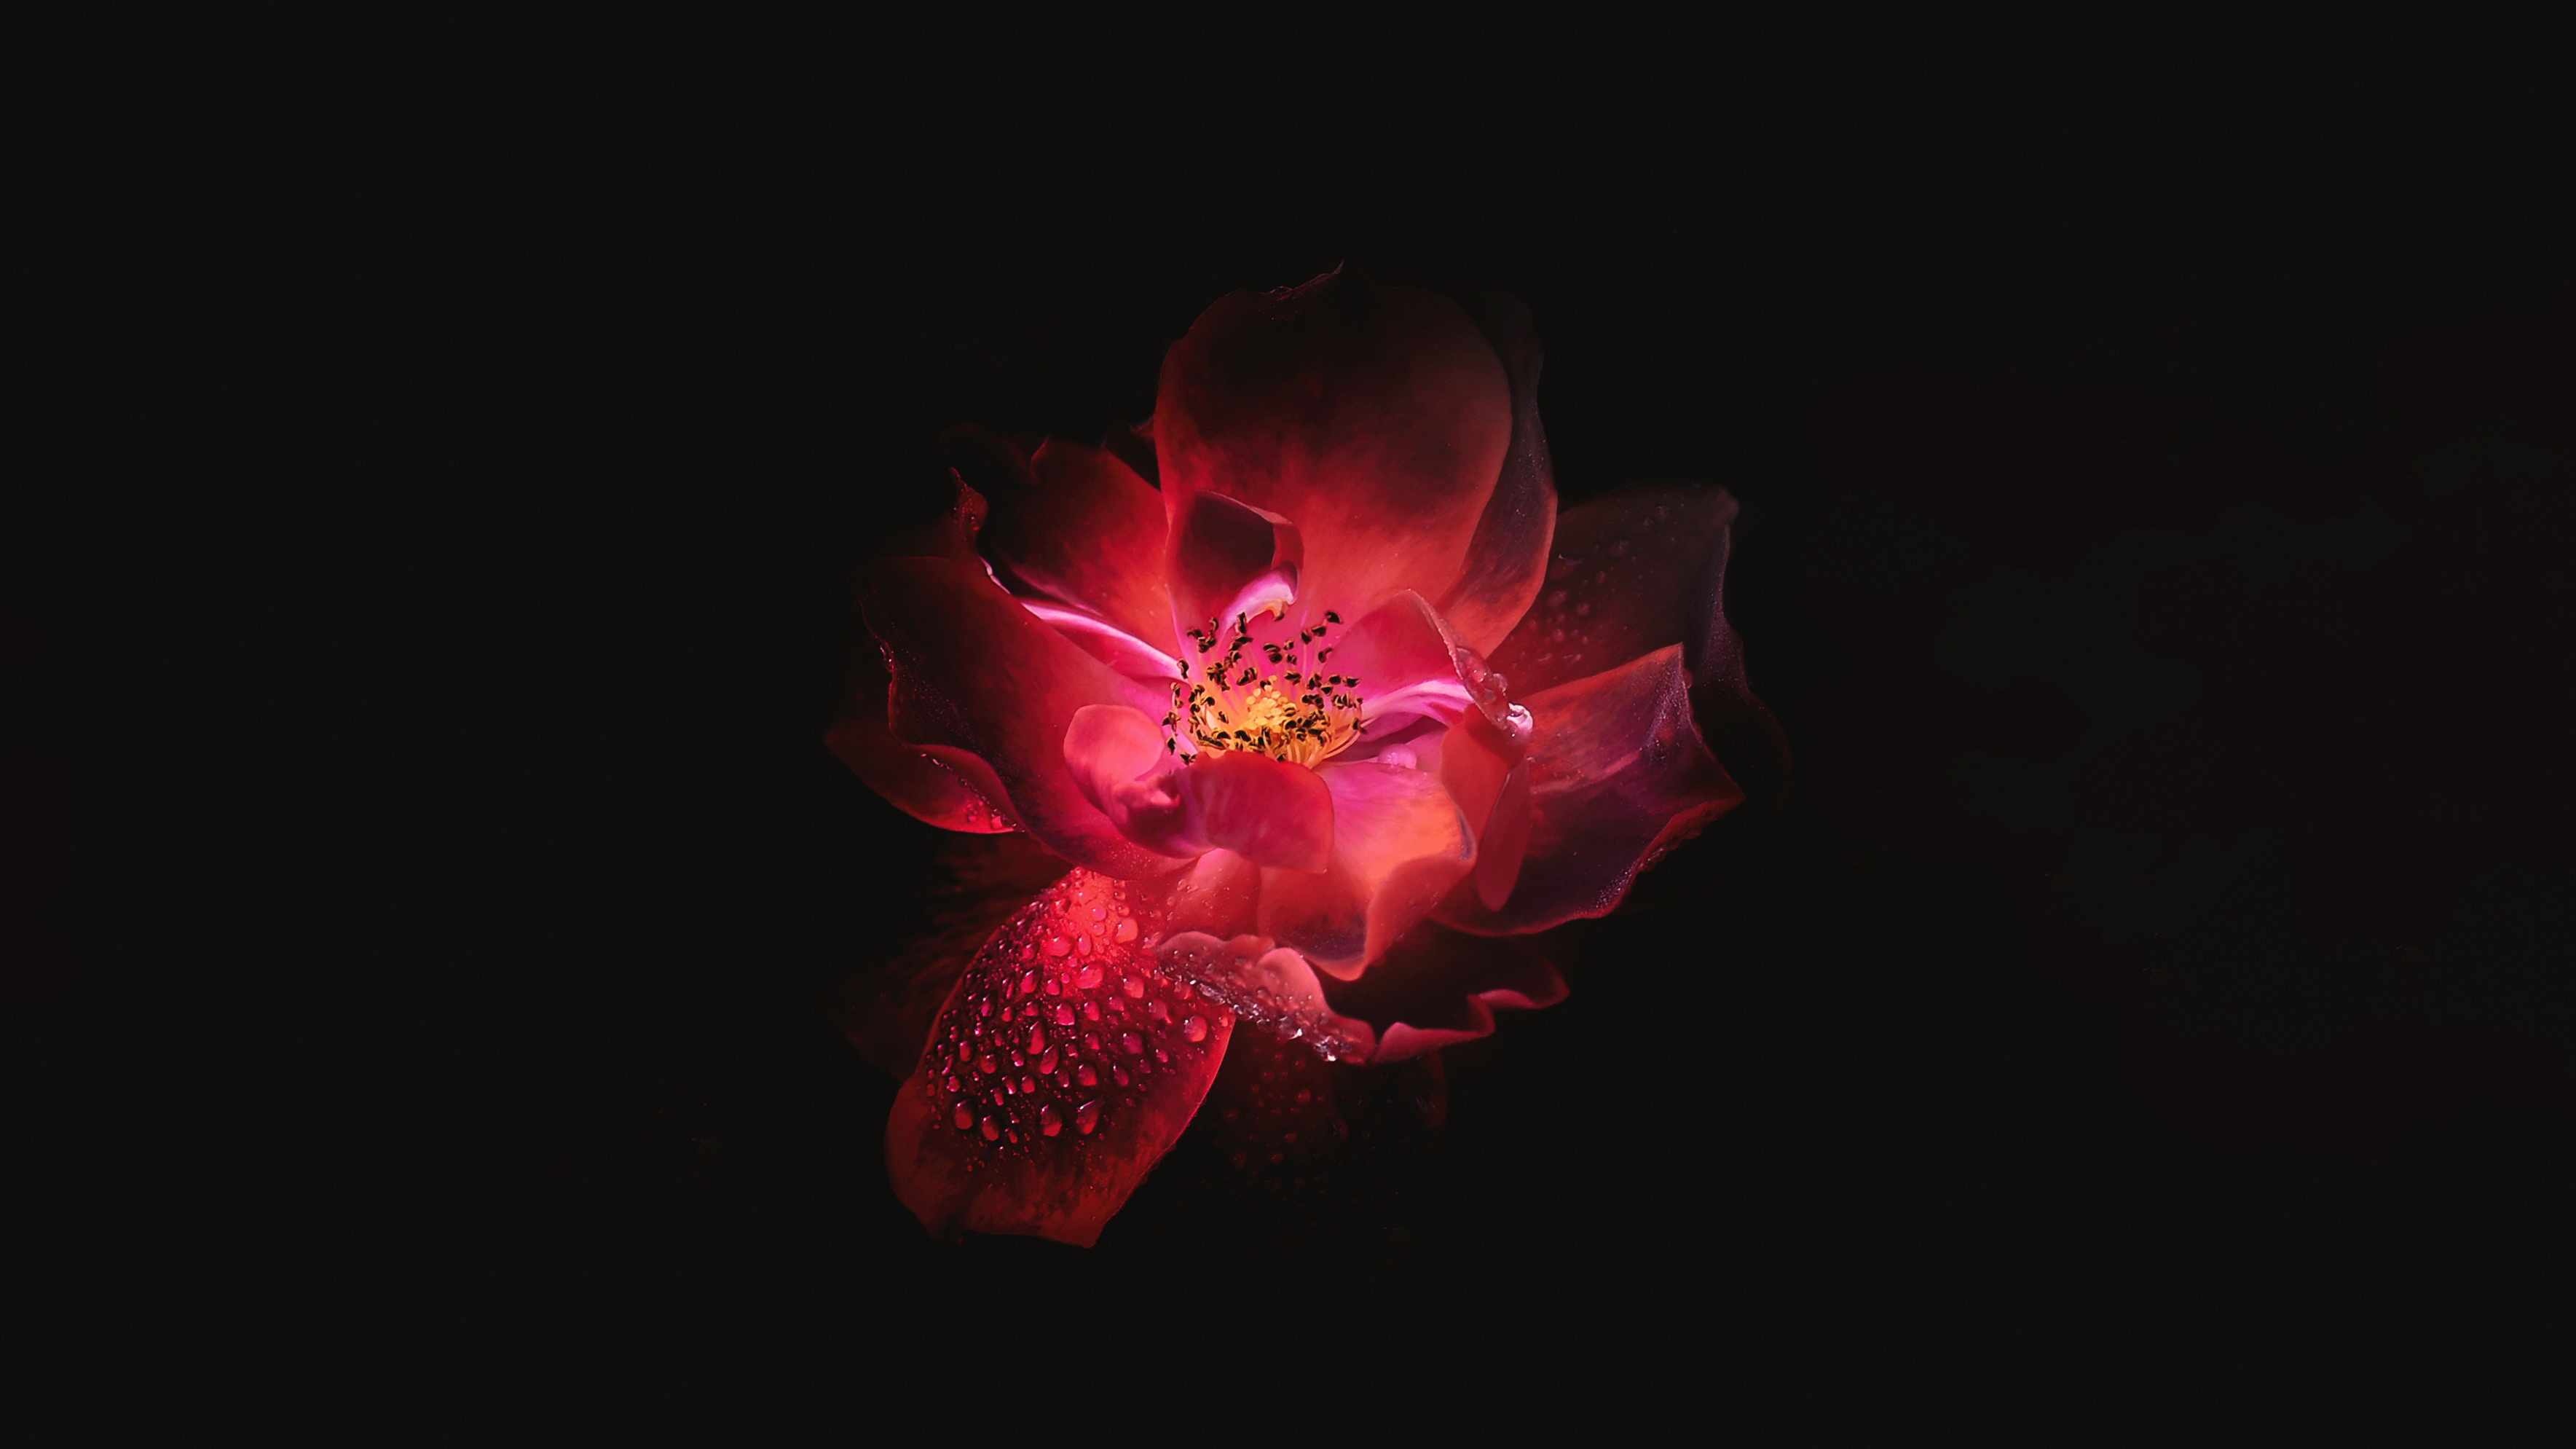 Red Flower Black Background 4k, HD Flowers, 4k Wallpapers, Images